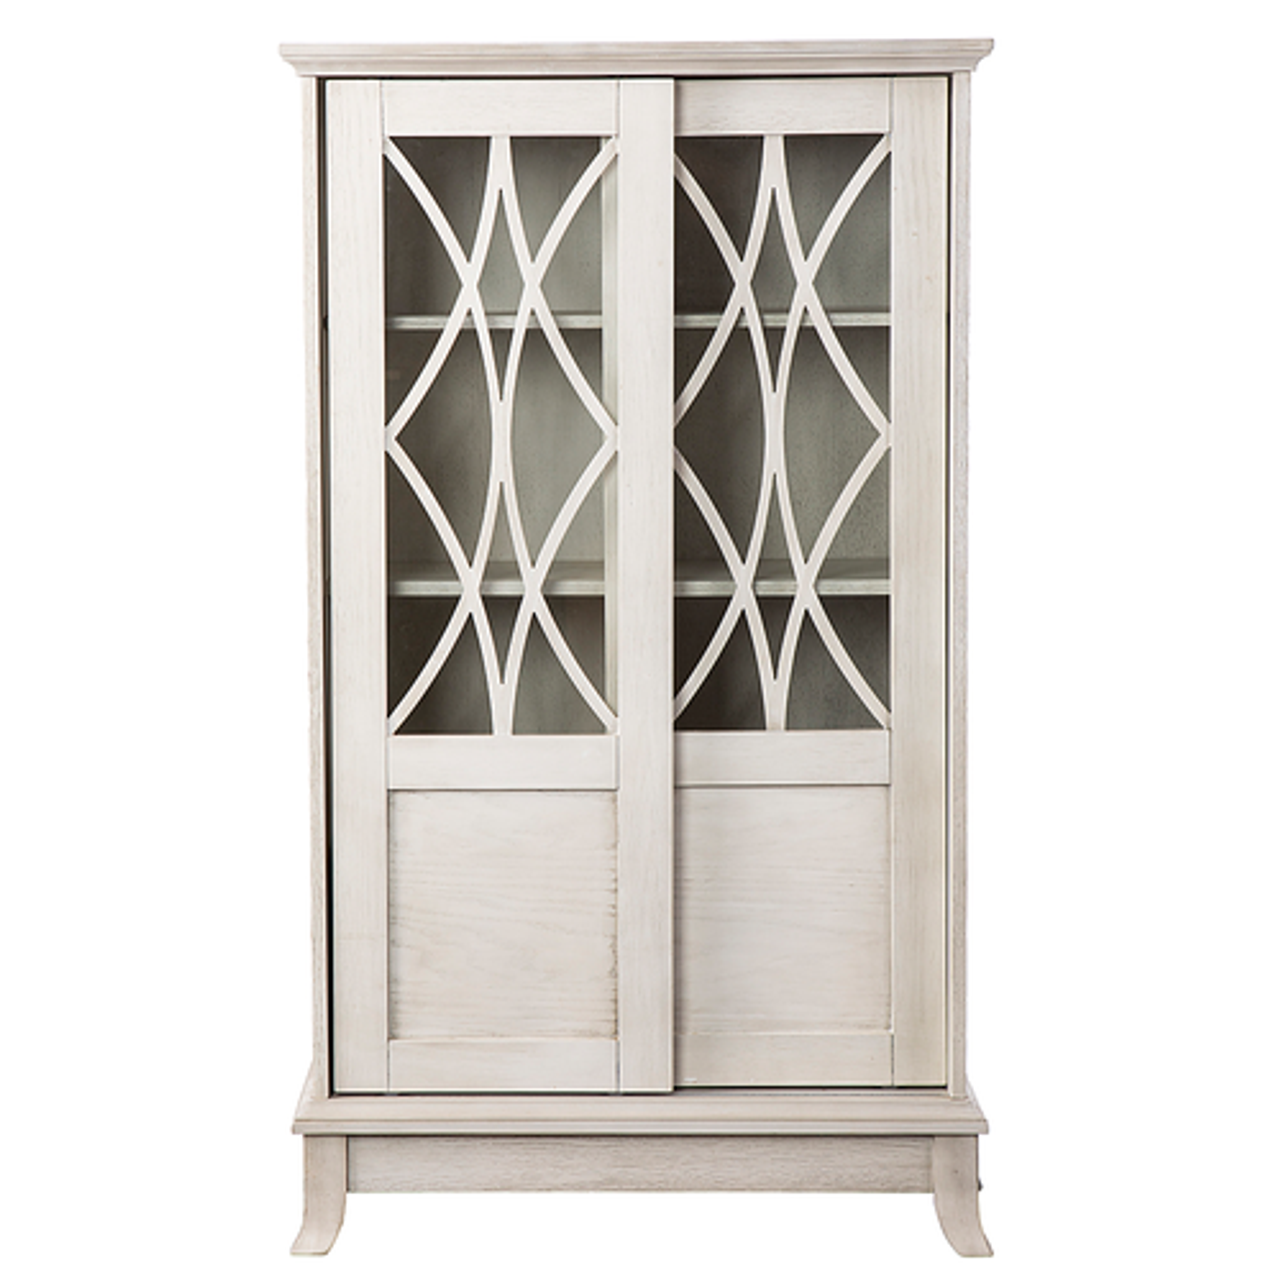 Southern Enterprises - Brindleford Sliding-Door Cabinet - Distressed white finish